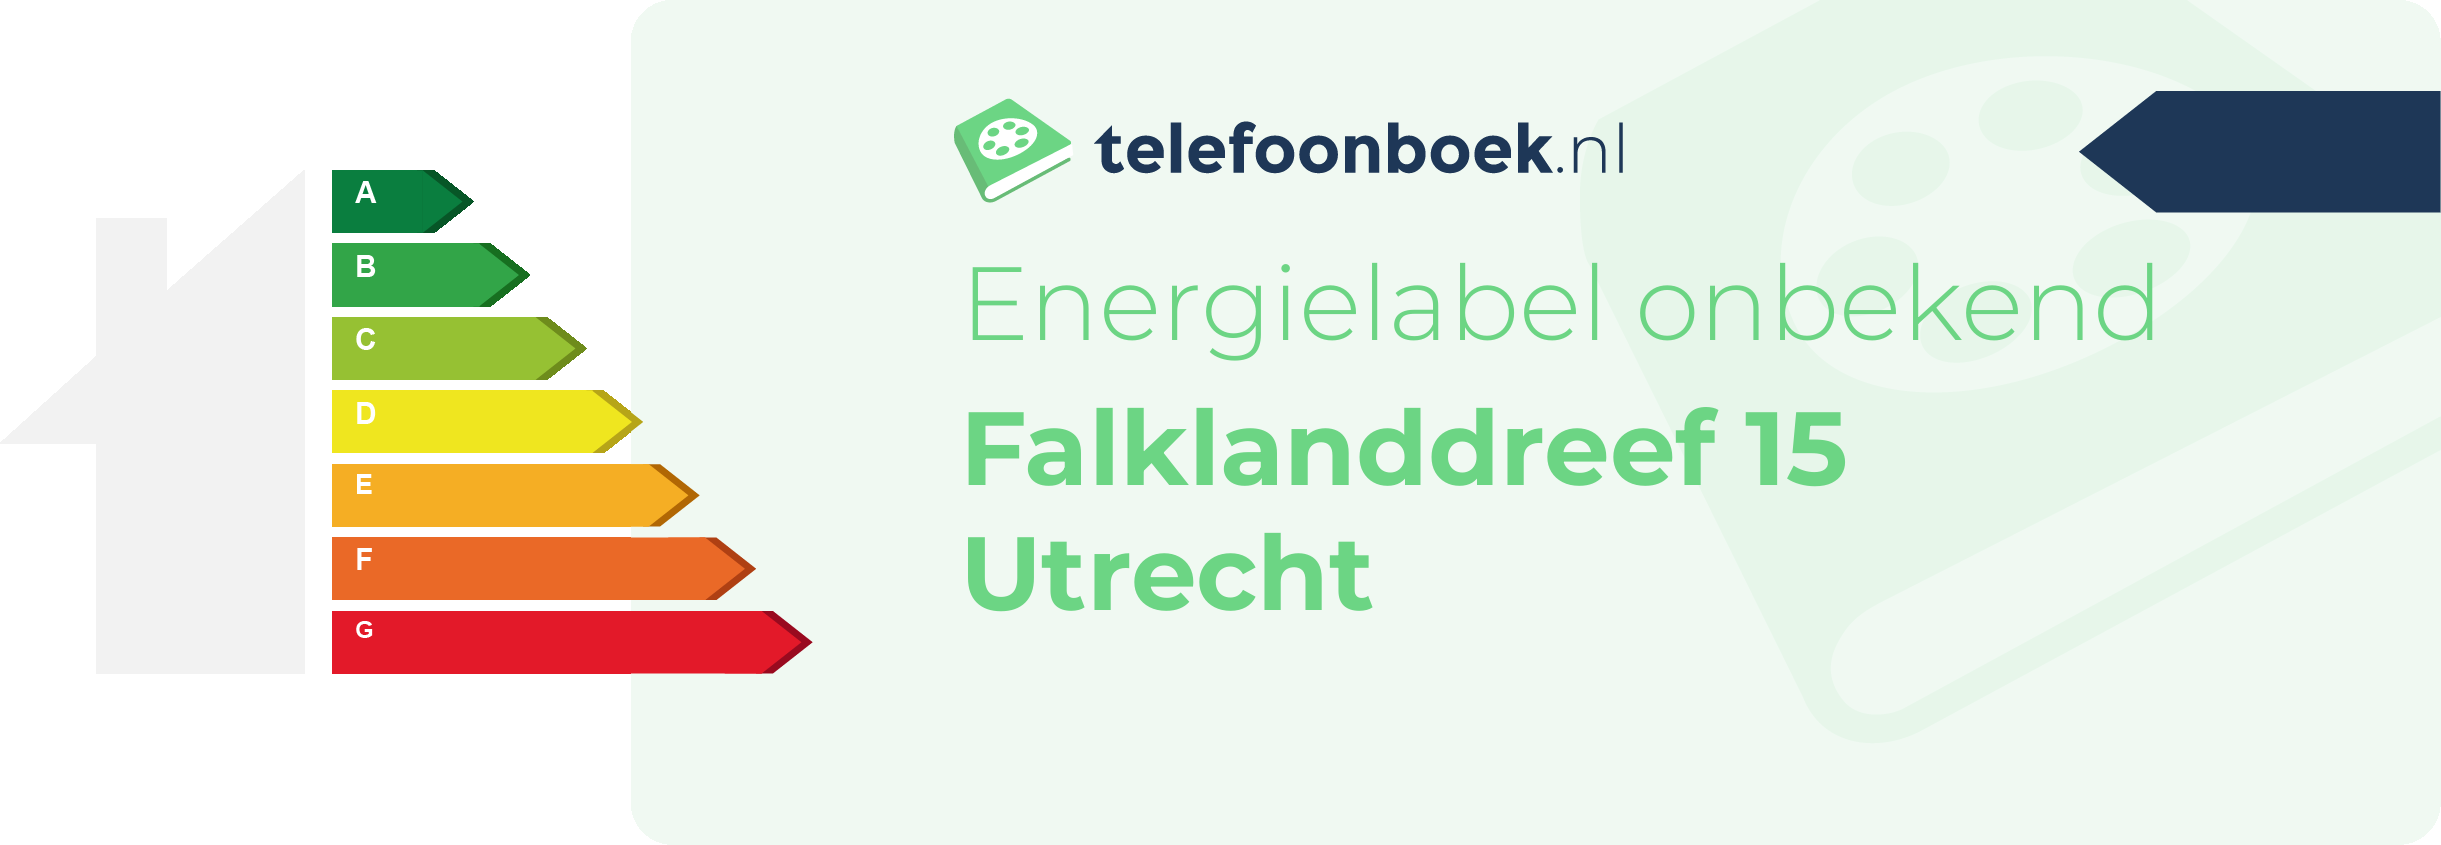 Energielabel Falklanddreef 15 Utrecht